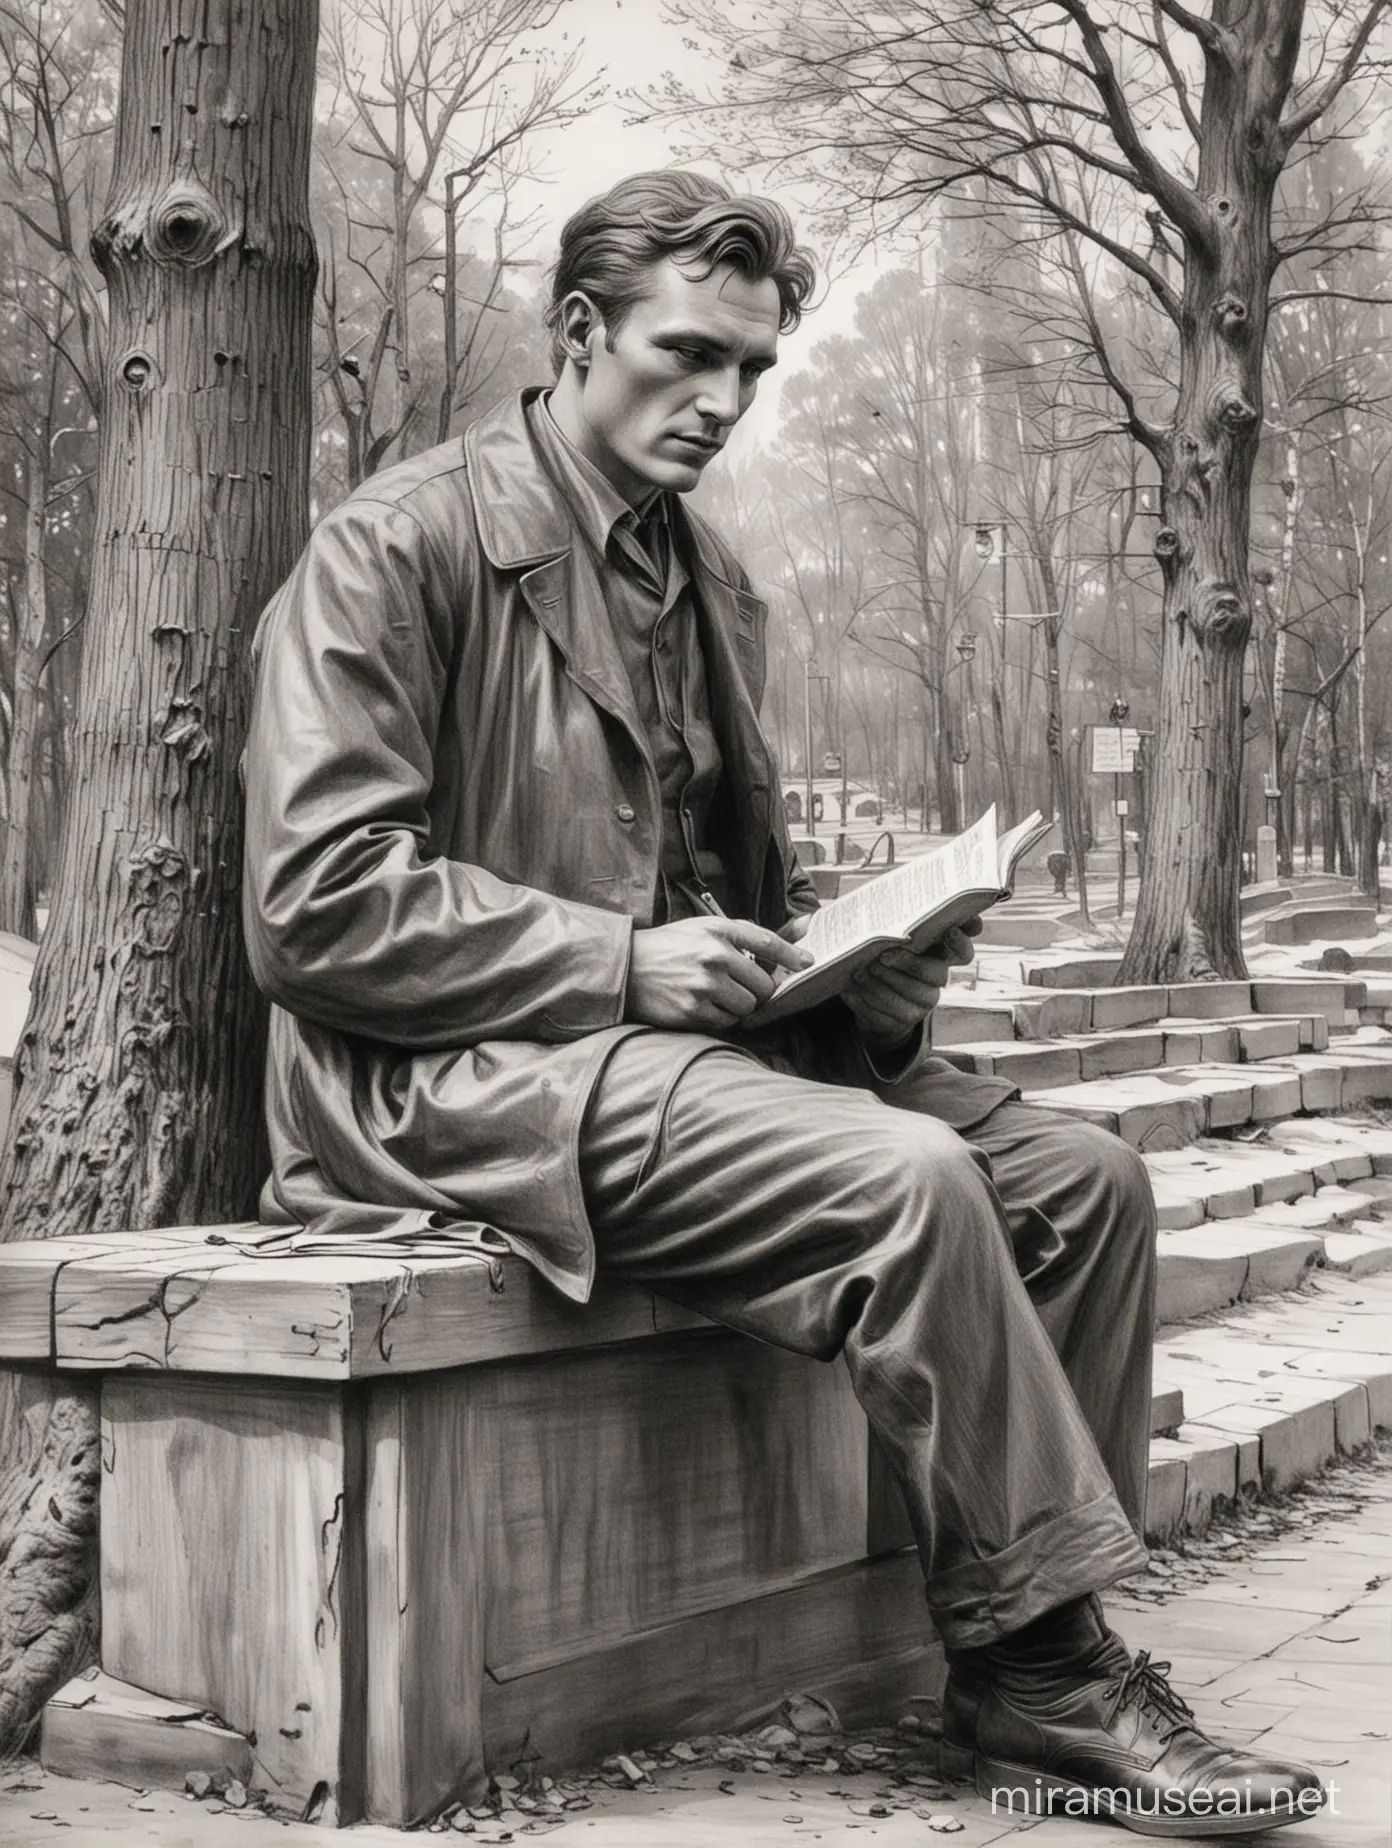 Sketch of Russian Poet Vladimir Mayakovsky Reading on Bench